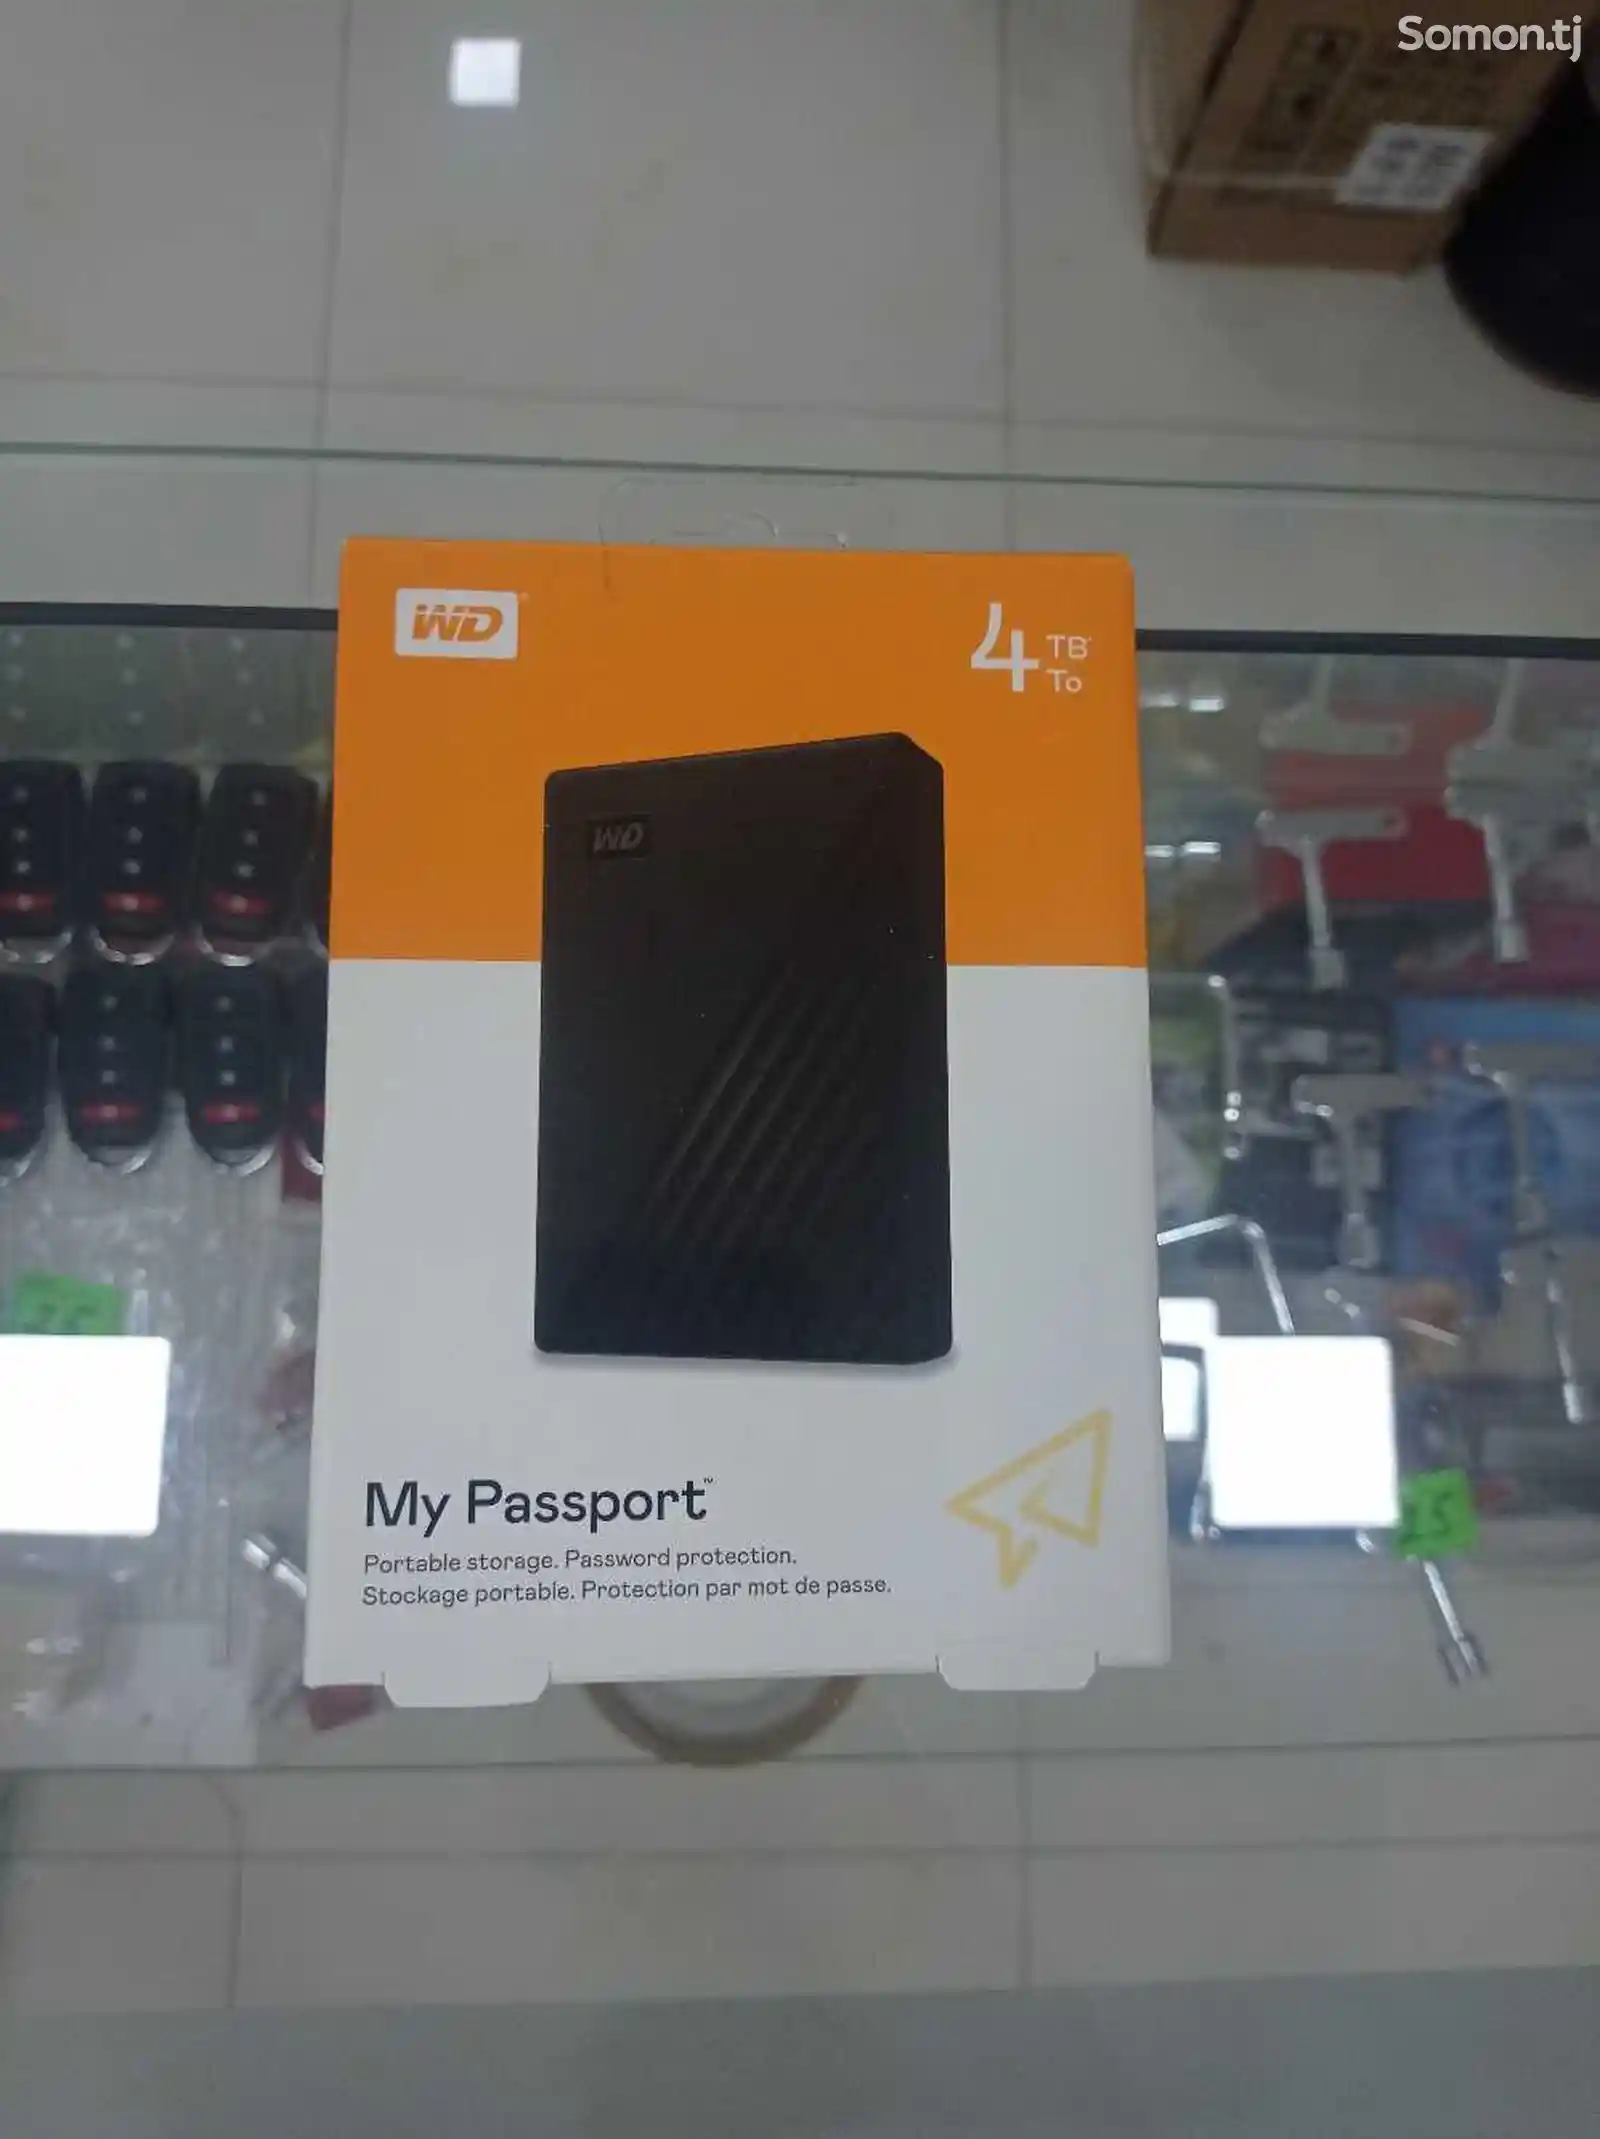 My passport 4 TB жёсткий диск